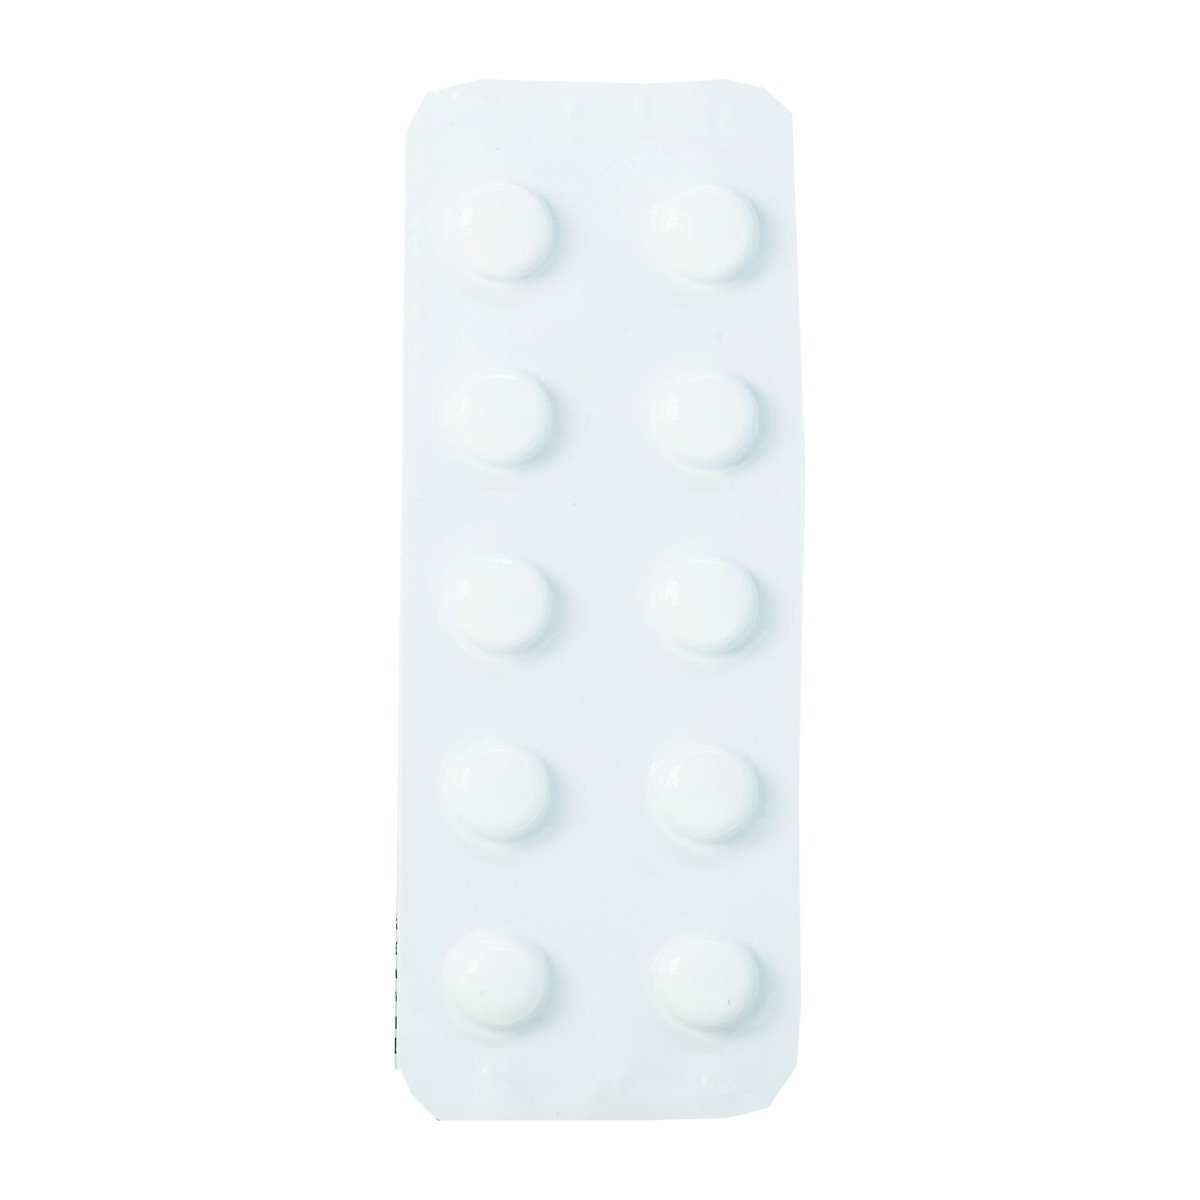 Multi Relax 5 mg - 20 Tablets - Bloom Pharmacy